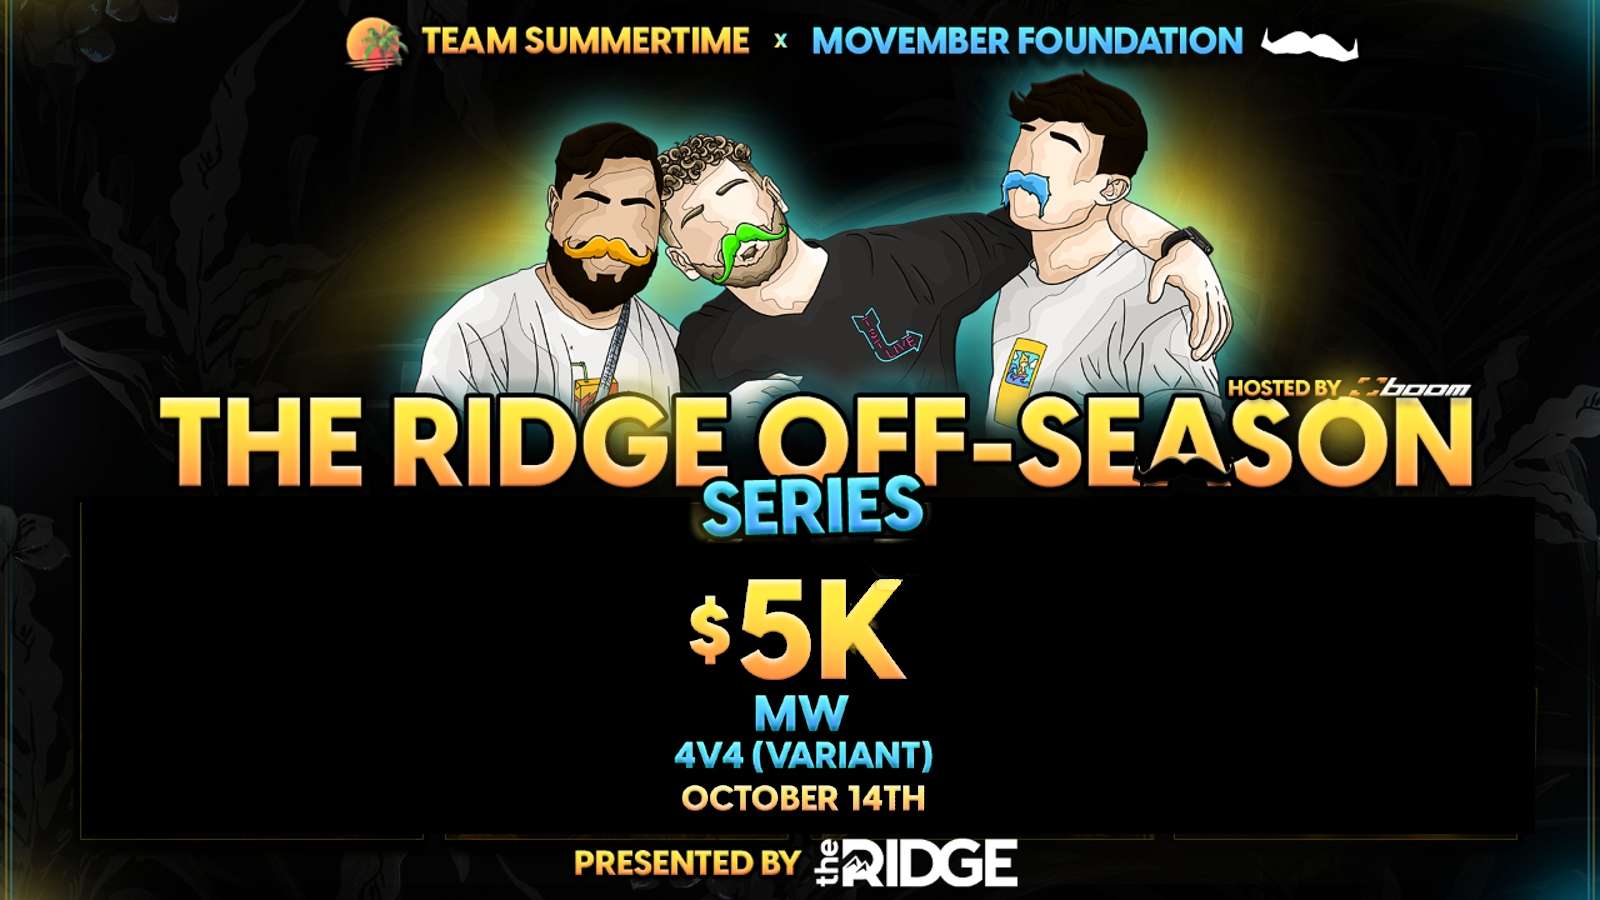 Hitch Ridge off season modern warfare tournament poster